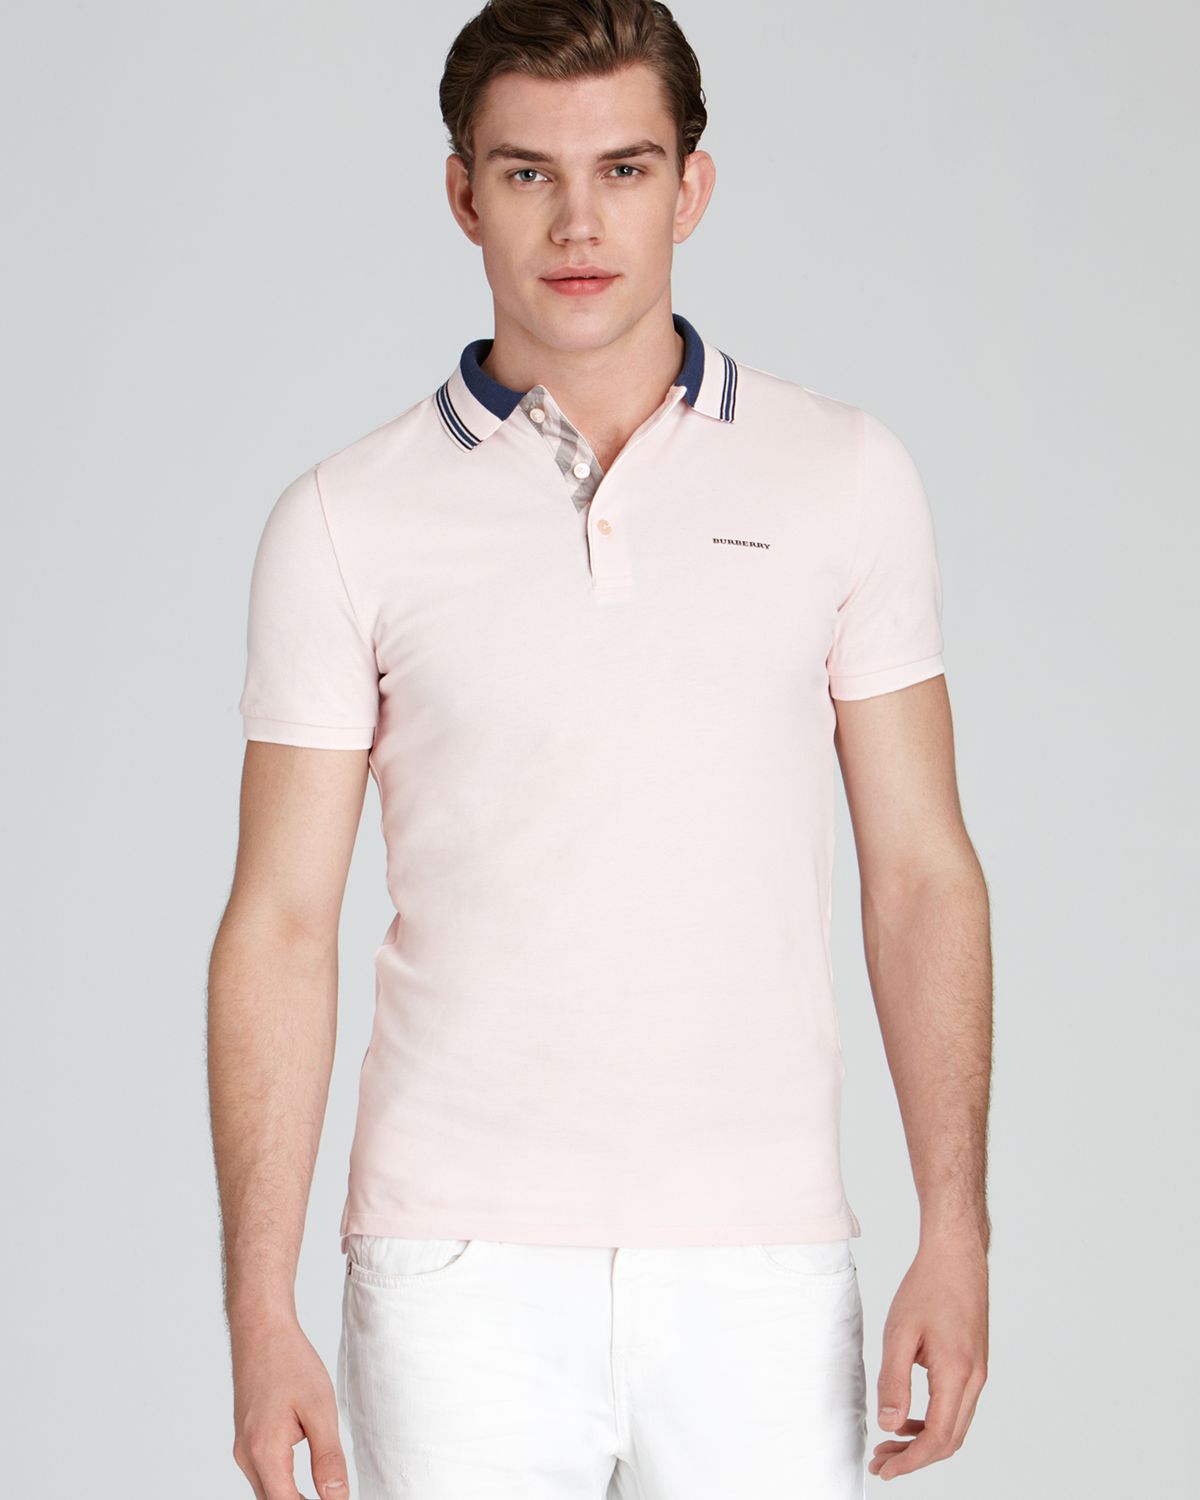 Burberry Cotton London Adler Short Sleeve Polo in Pink for Men - Lyst